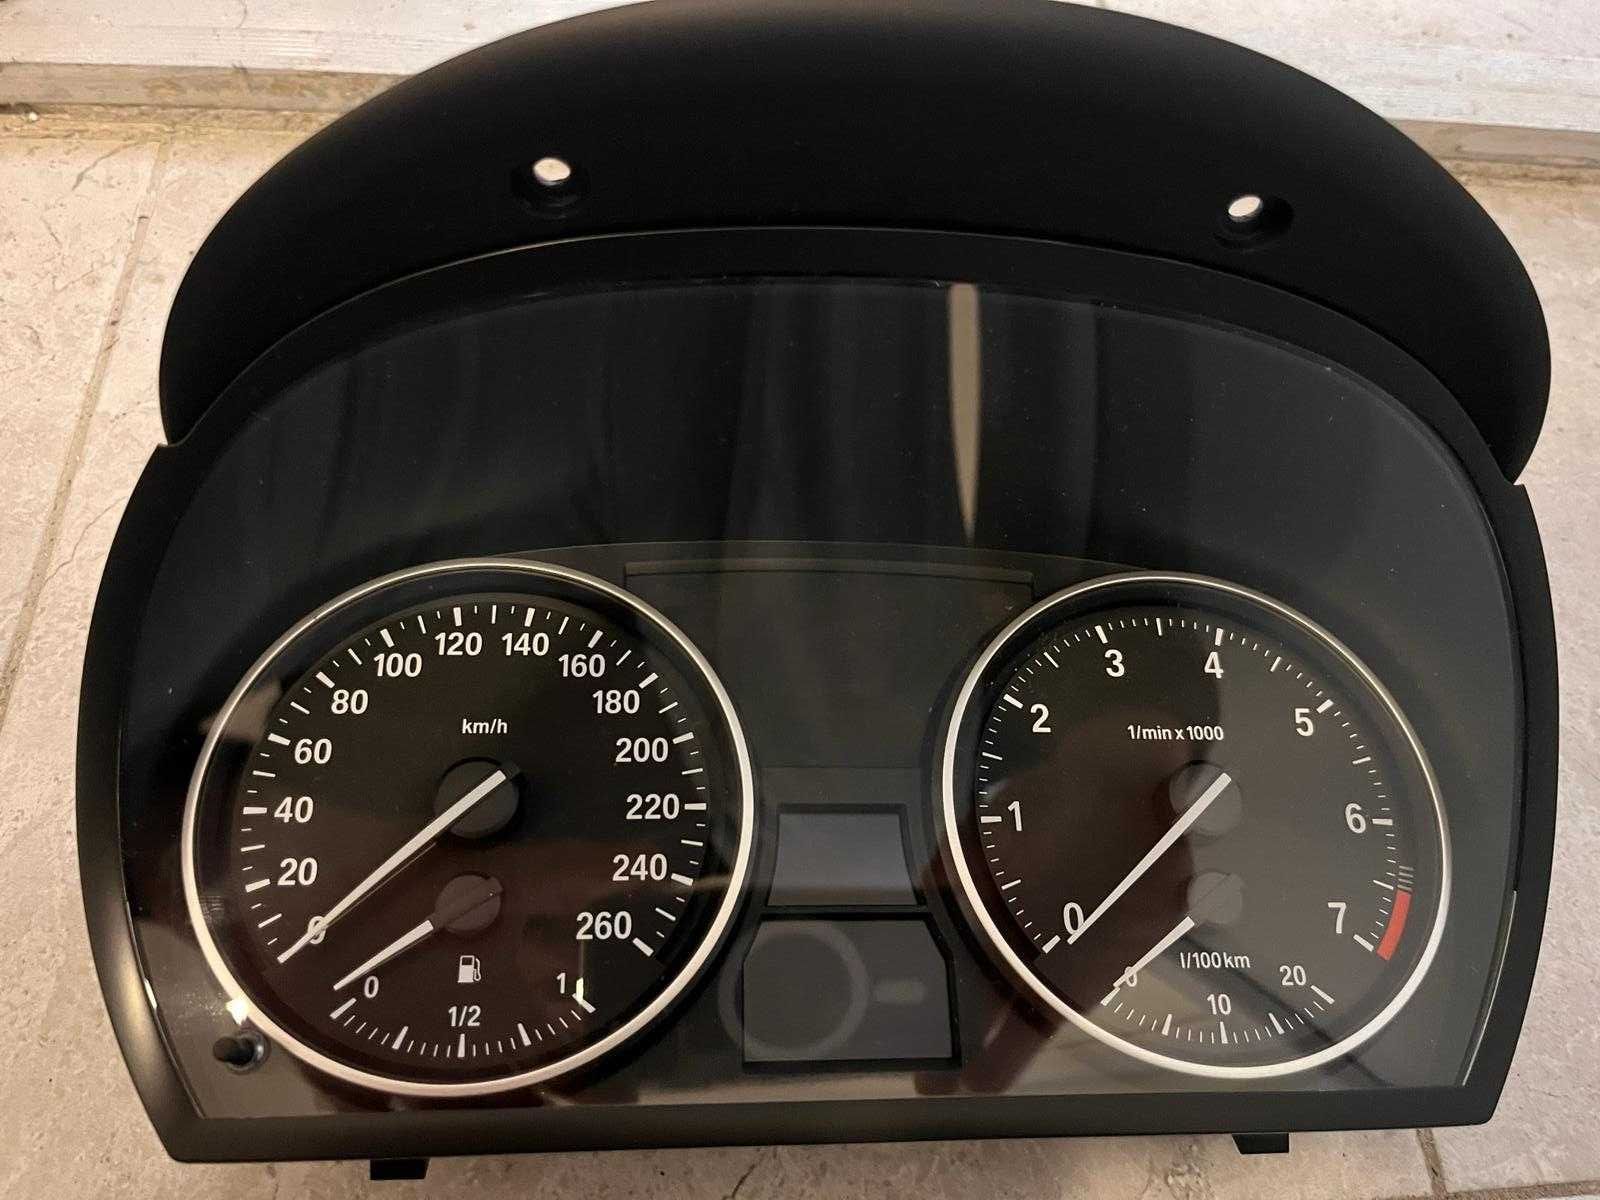 Ceasuri bord BMW E90/E84 LCI, benzina. NOI! 0 km! Europa LHD!